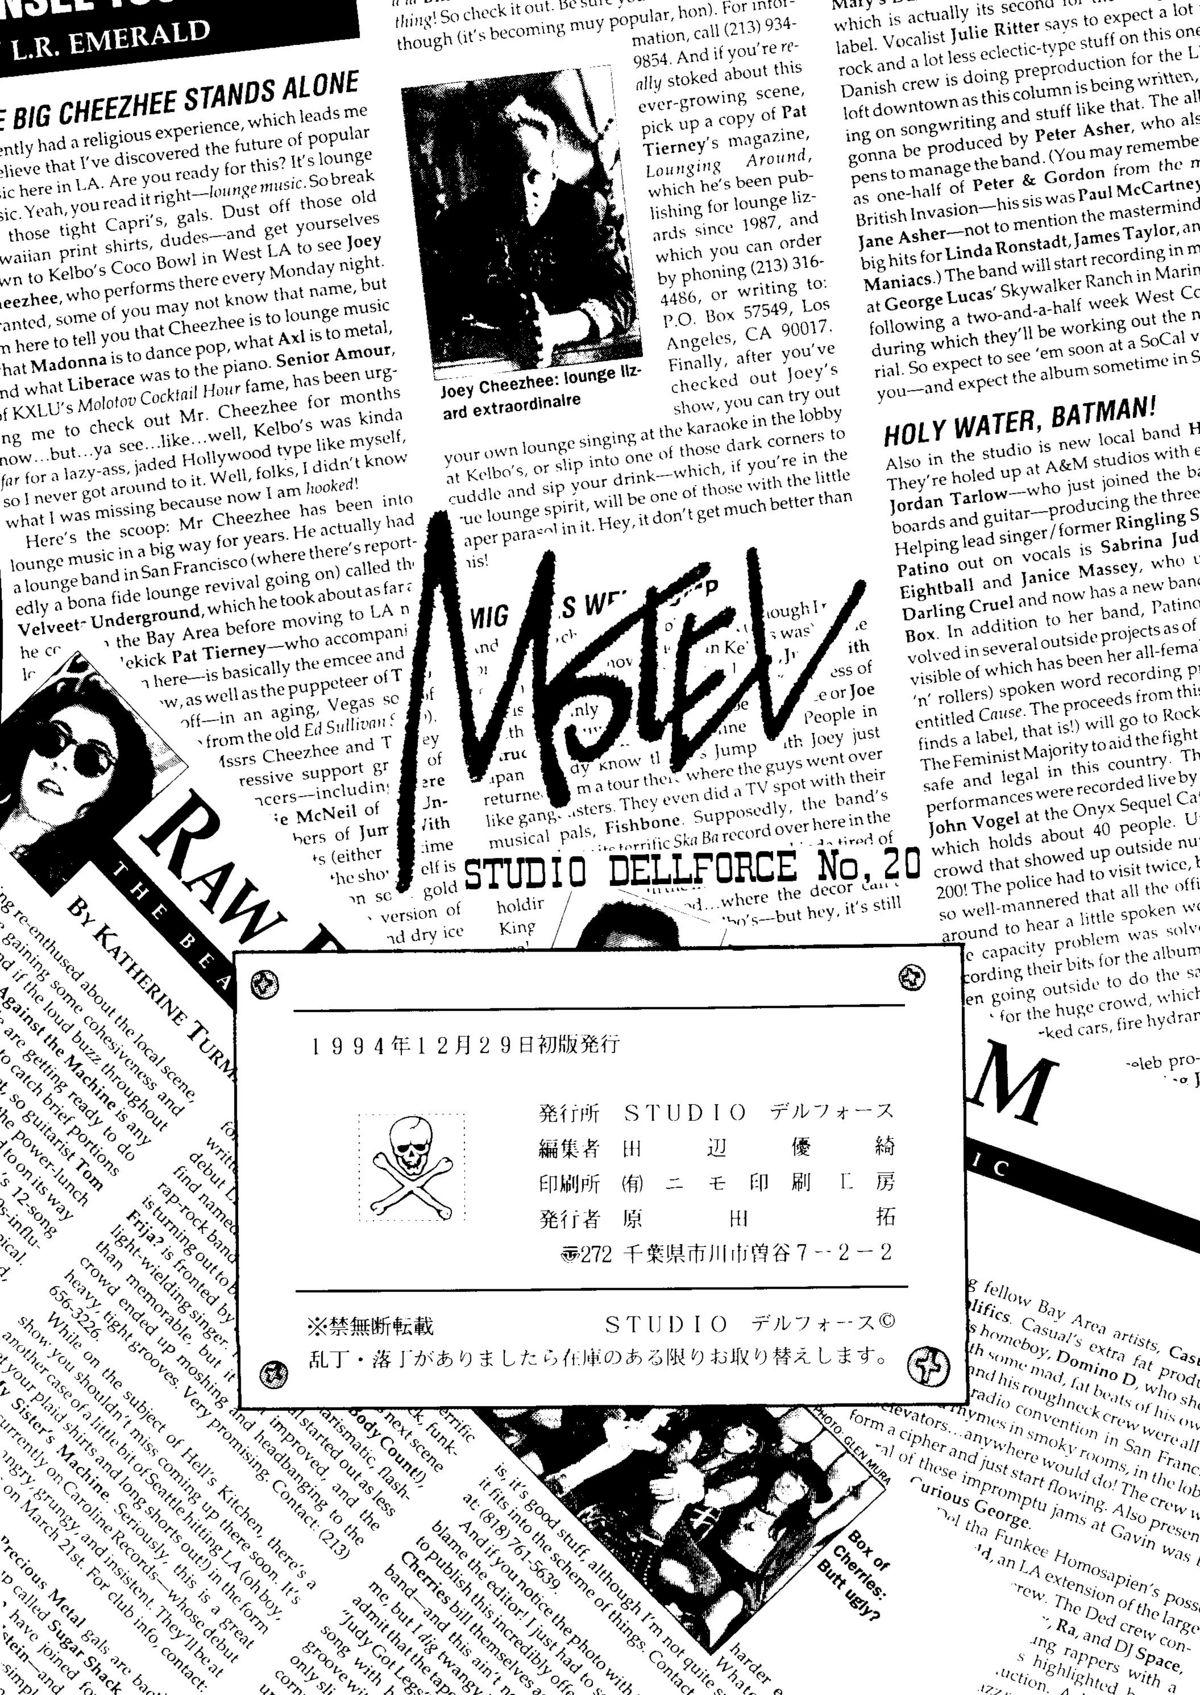 [Studio Dellforce] Motel (Magic Knight Rayearth) (C47) [STUDIOデルフォース] MOTEL (魔法騎士レイアース)